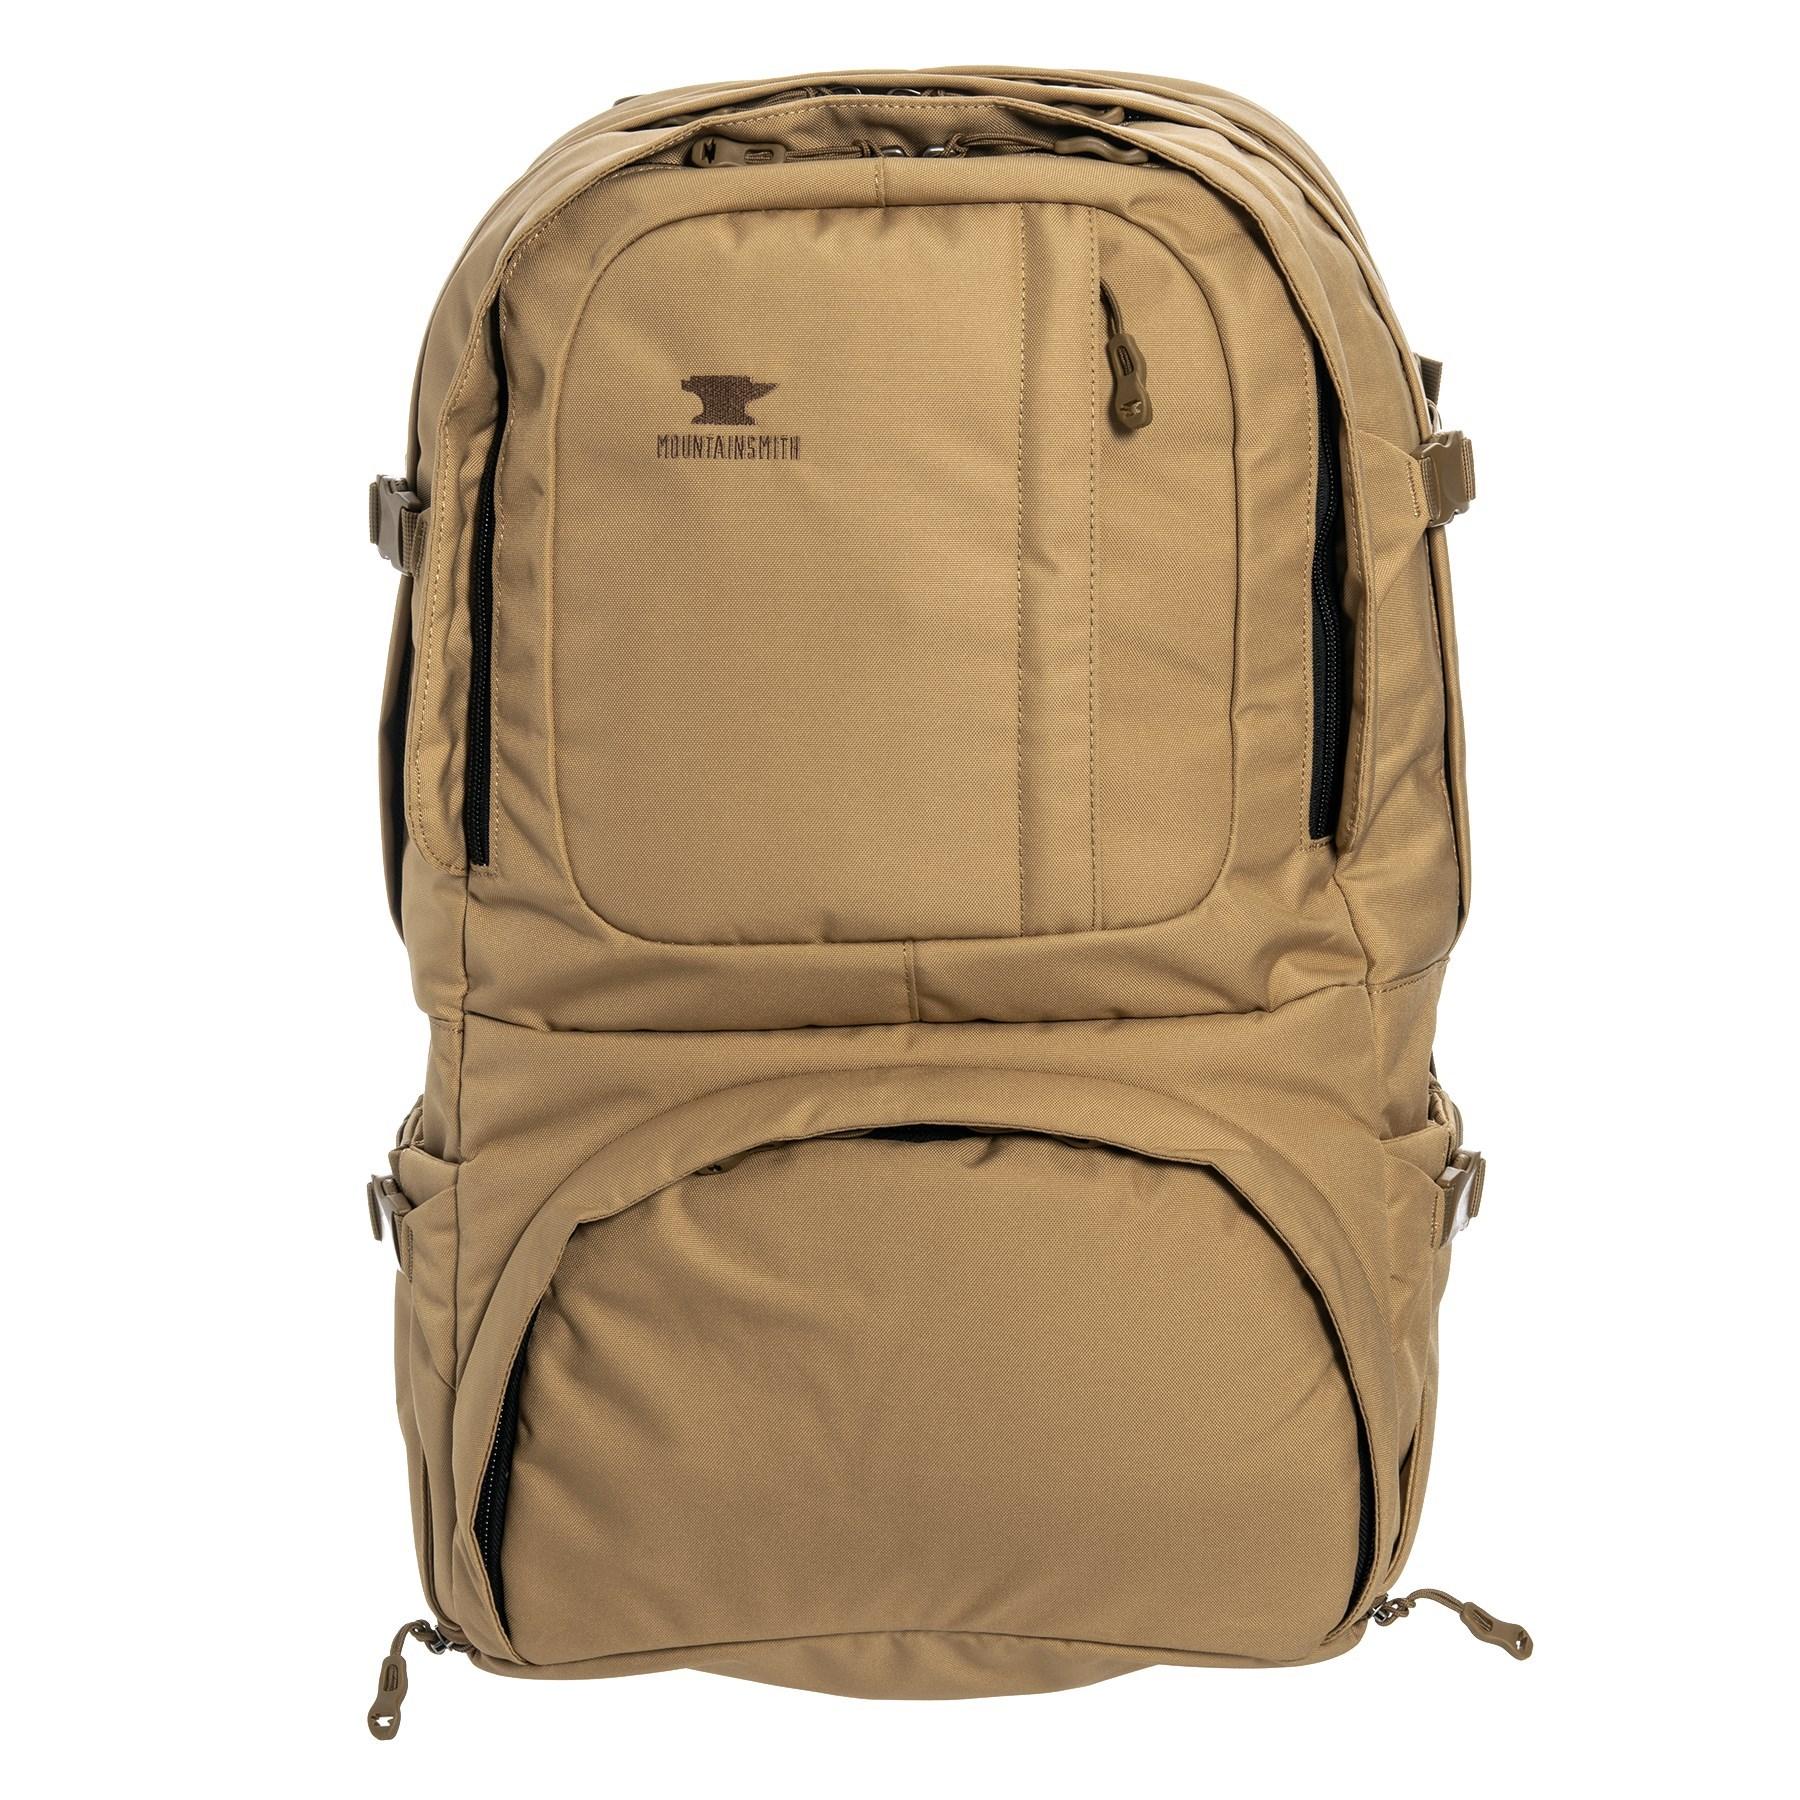 mountainsmith borealis backpack